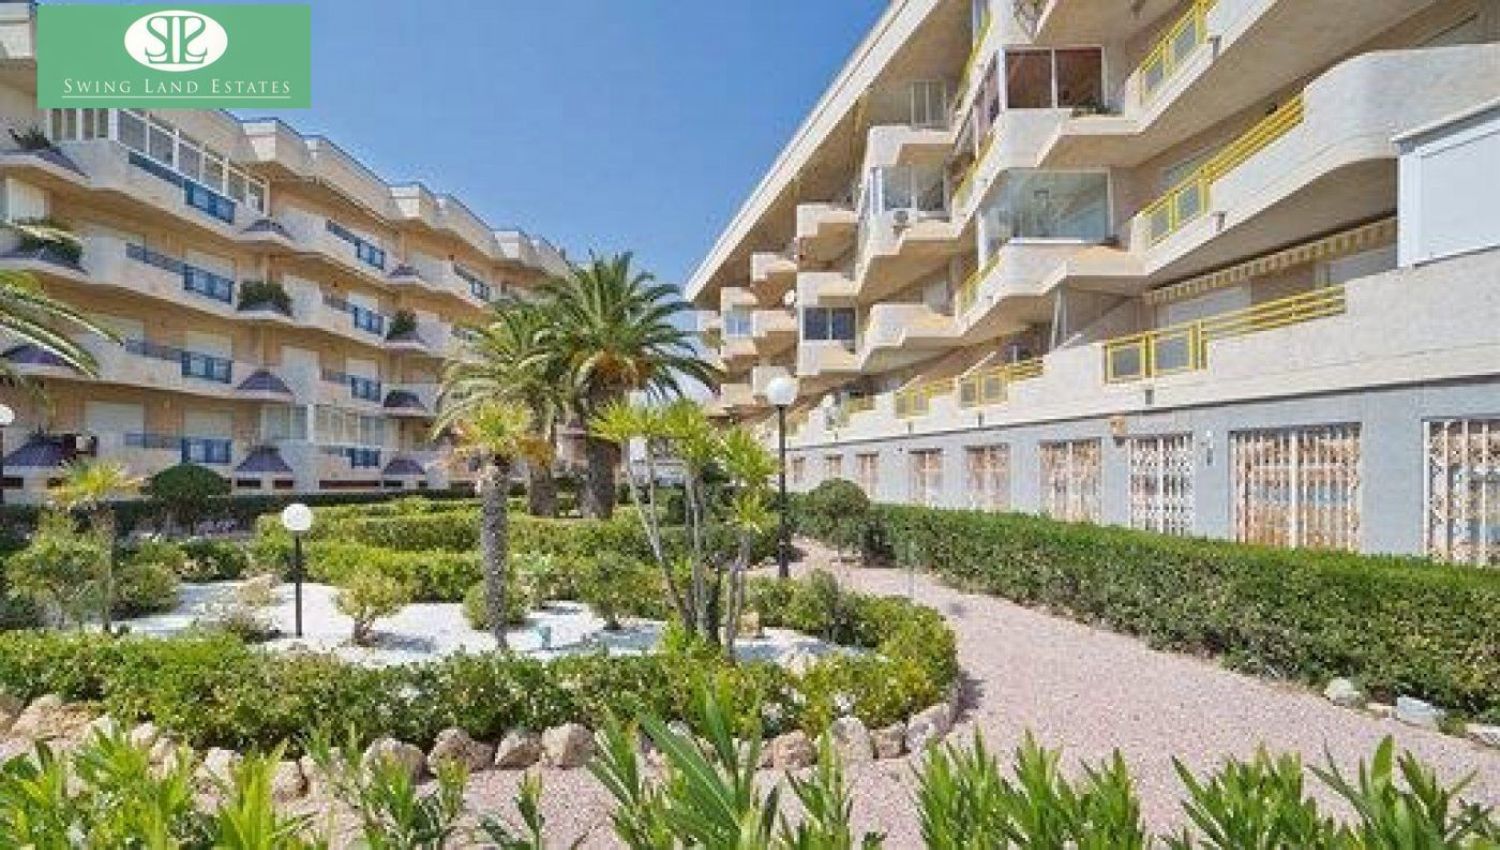 Apartment for sale on the seafront in Vistamar Urbanization, in Pilar de la Horadada